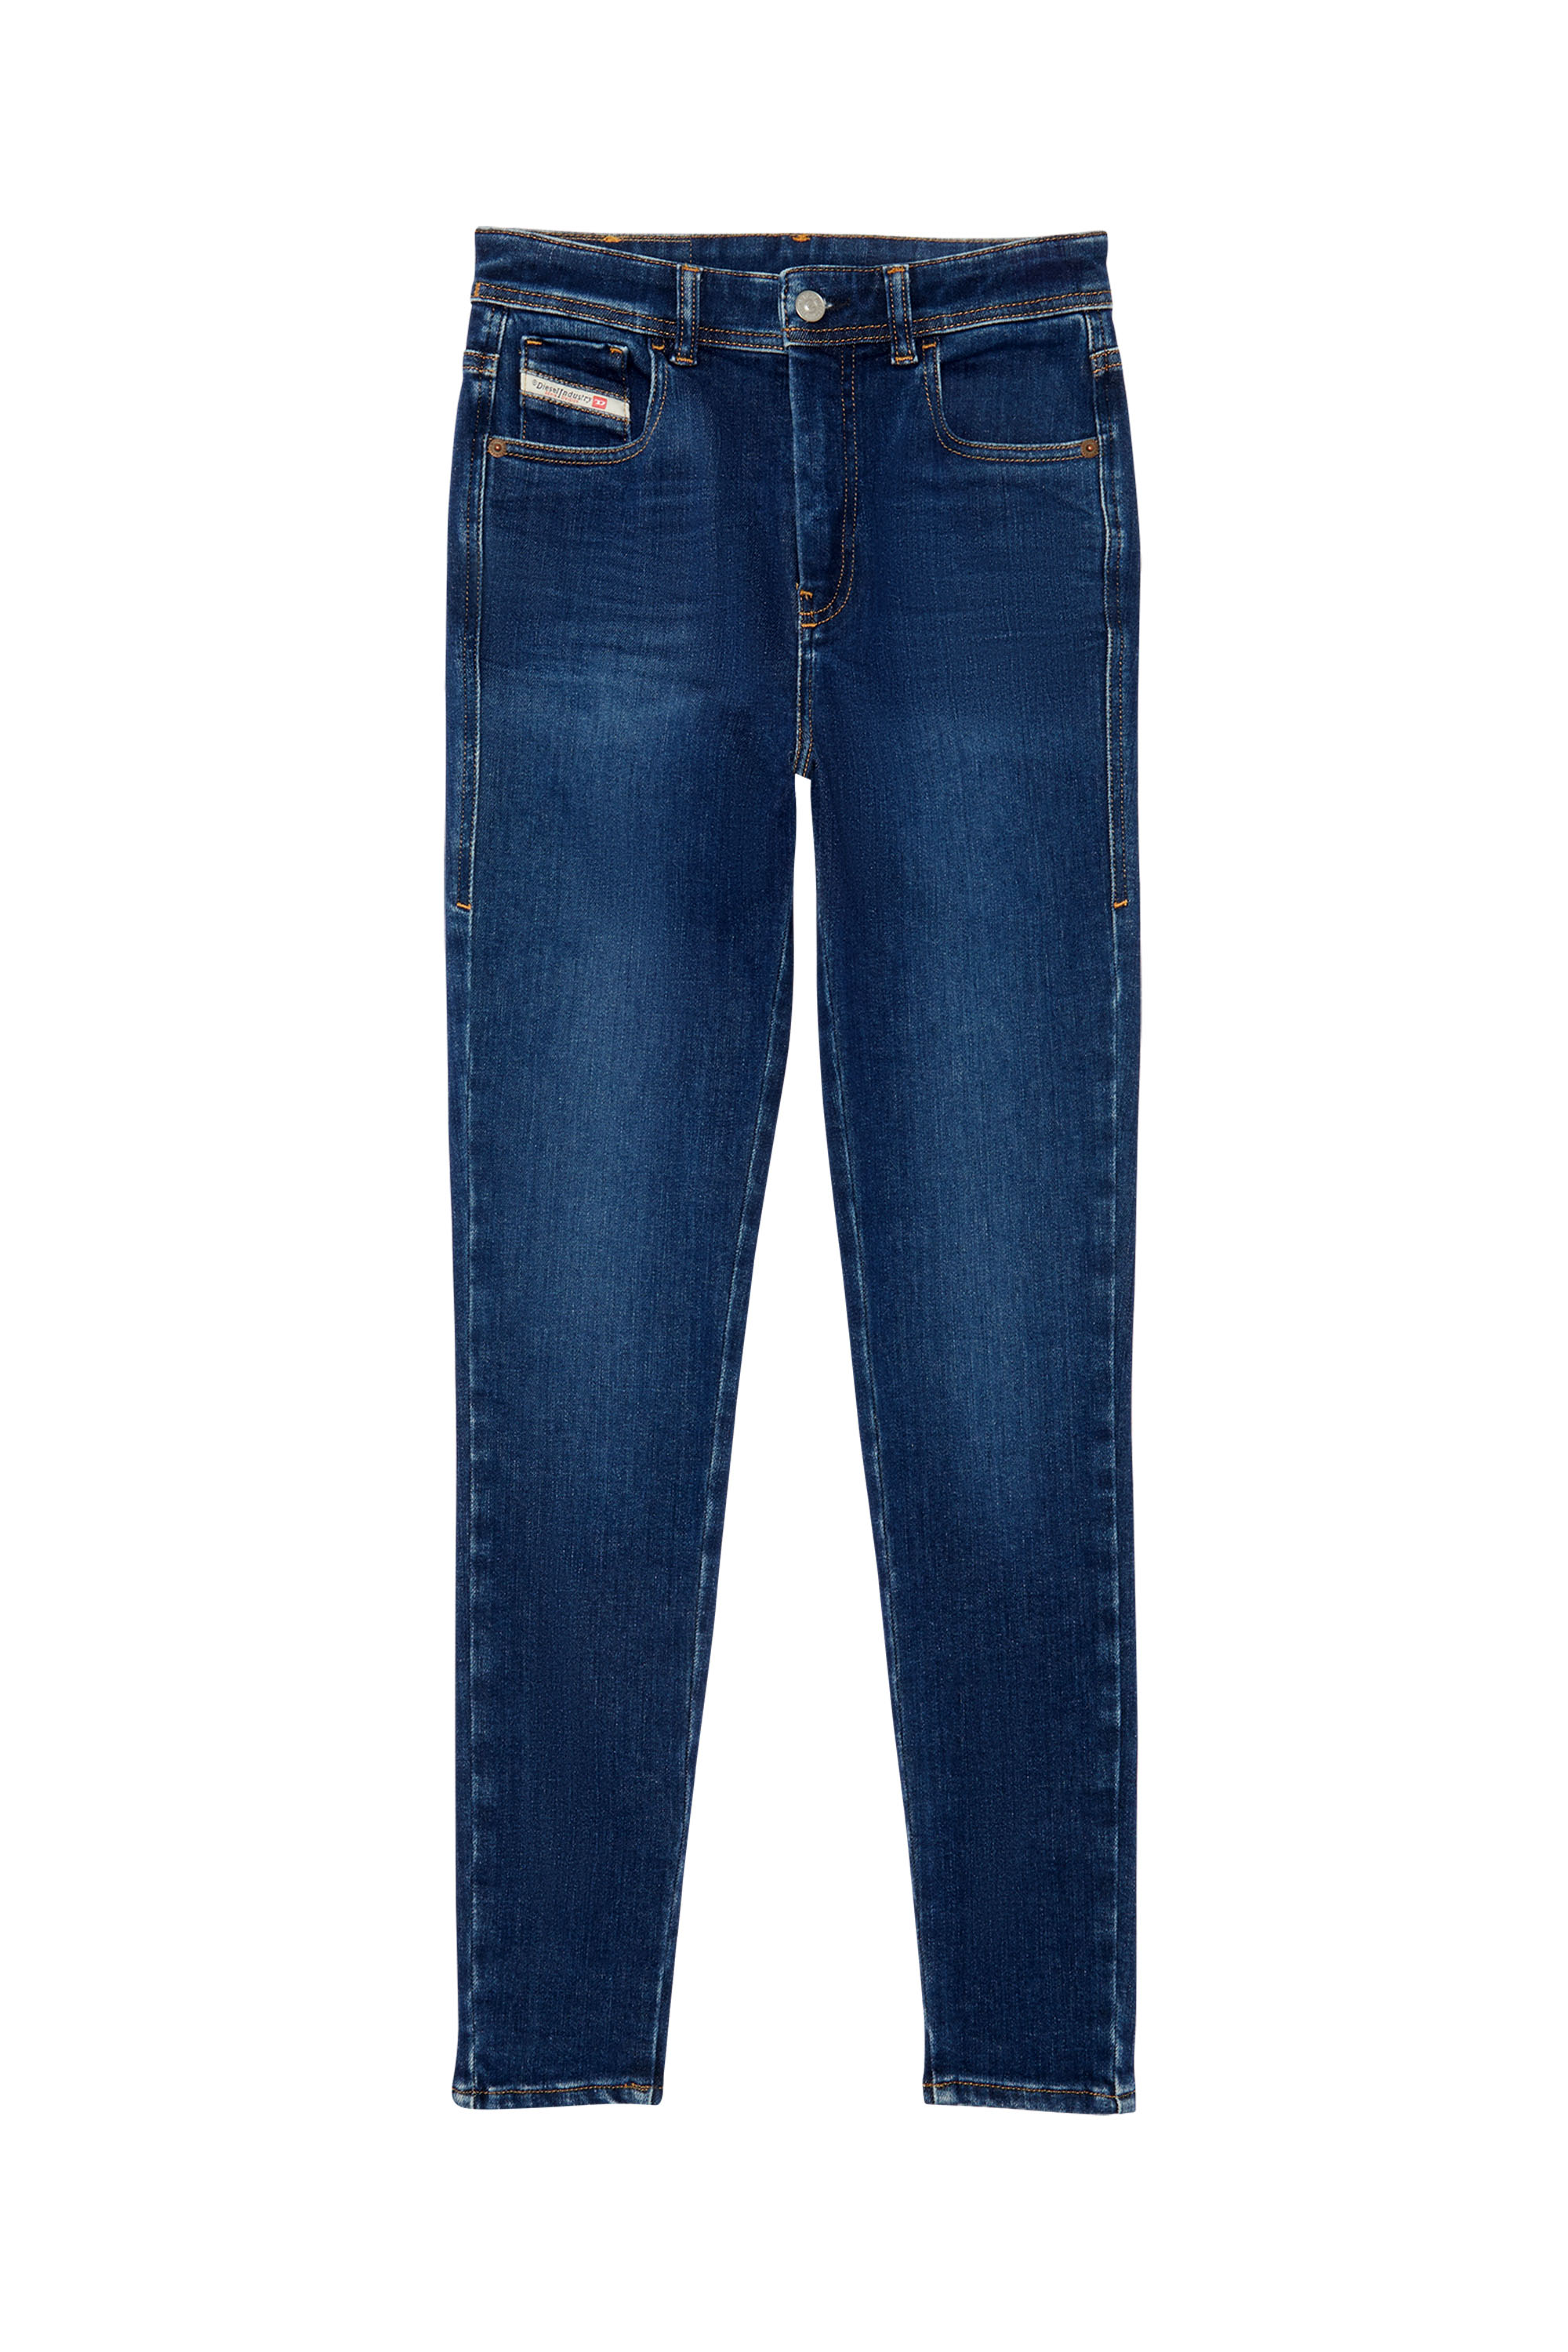 Super skinny Jeans 1984 Slandy-High 09C19, Bleu Foncé - Jeans